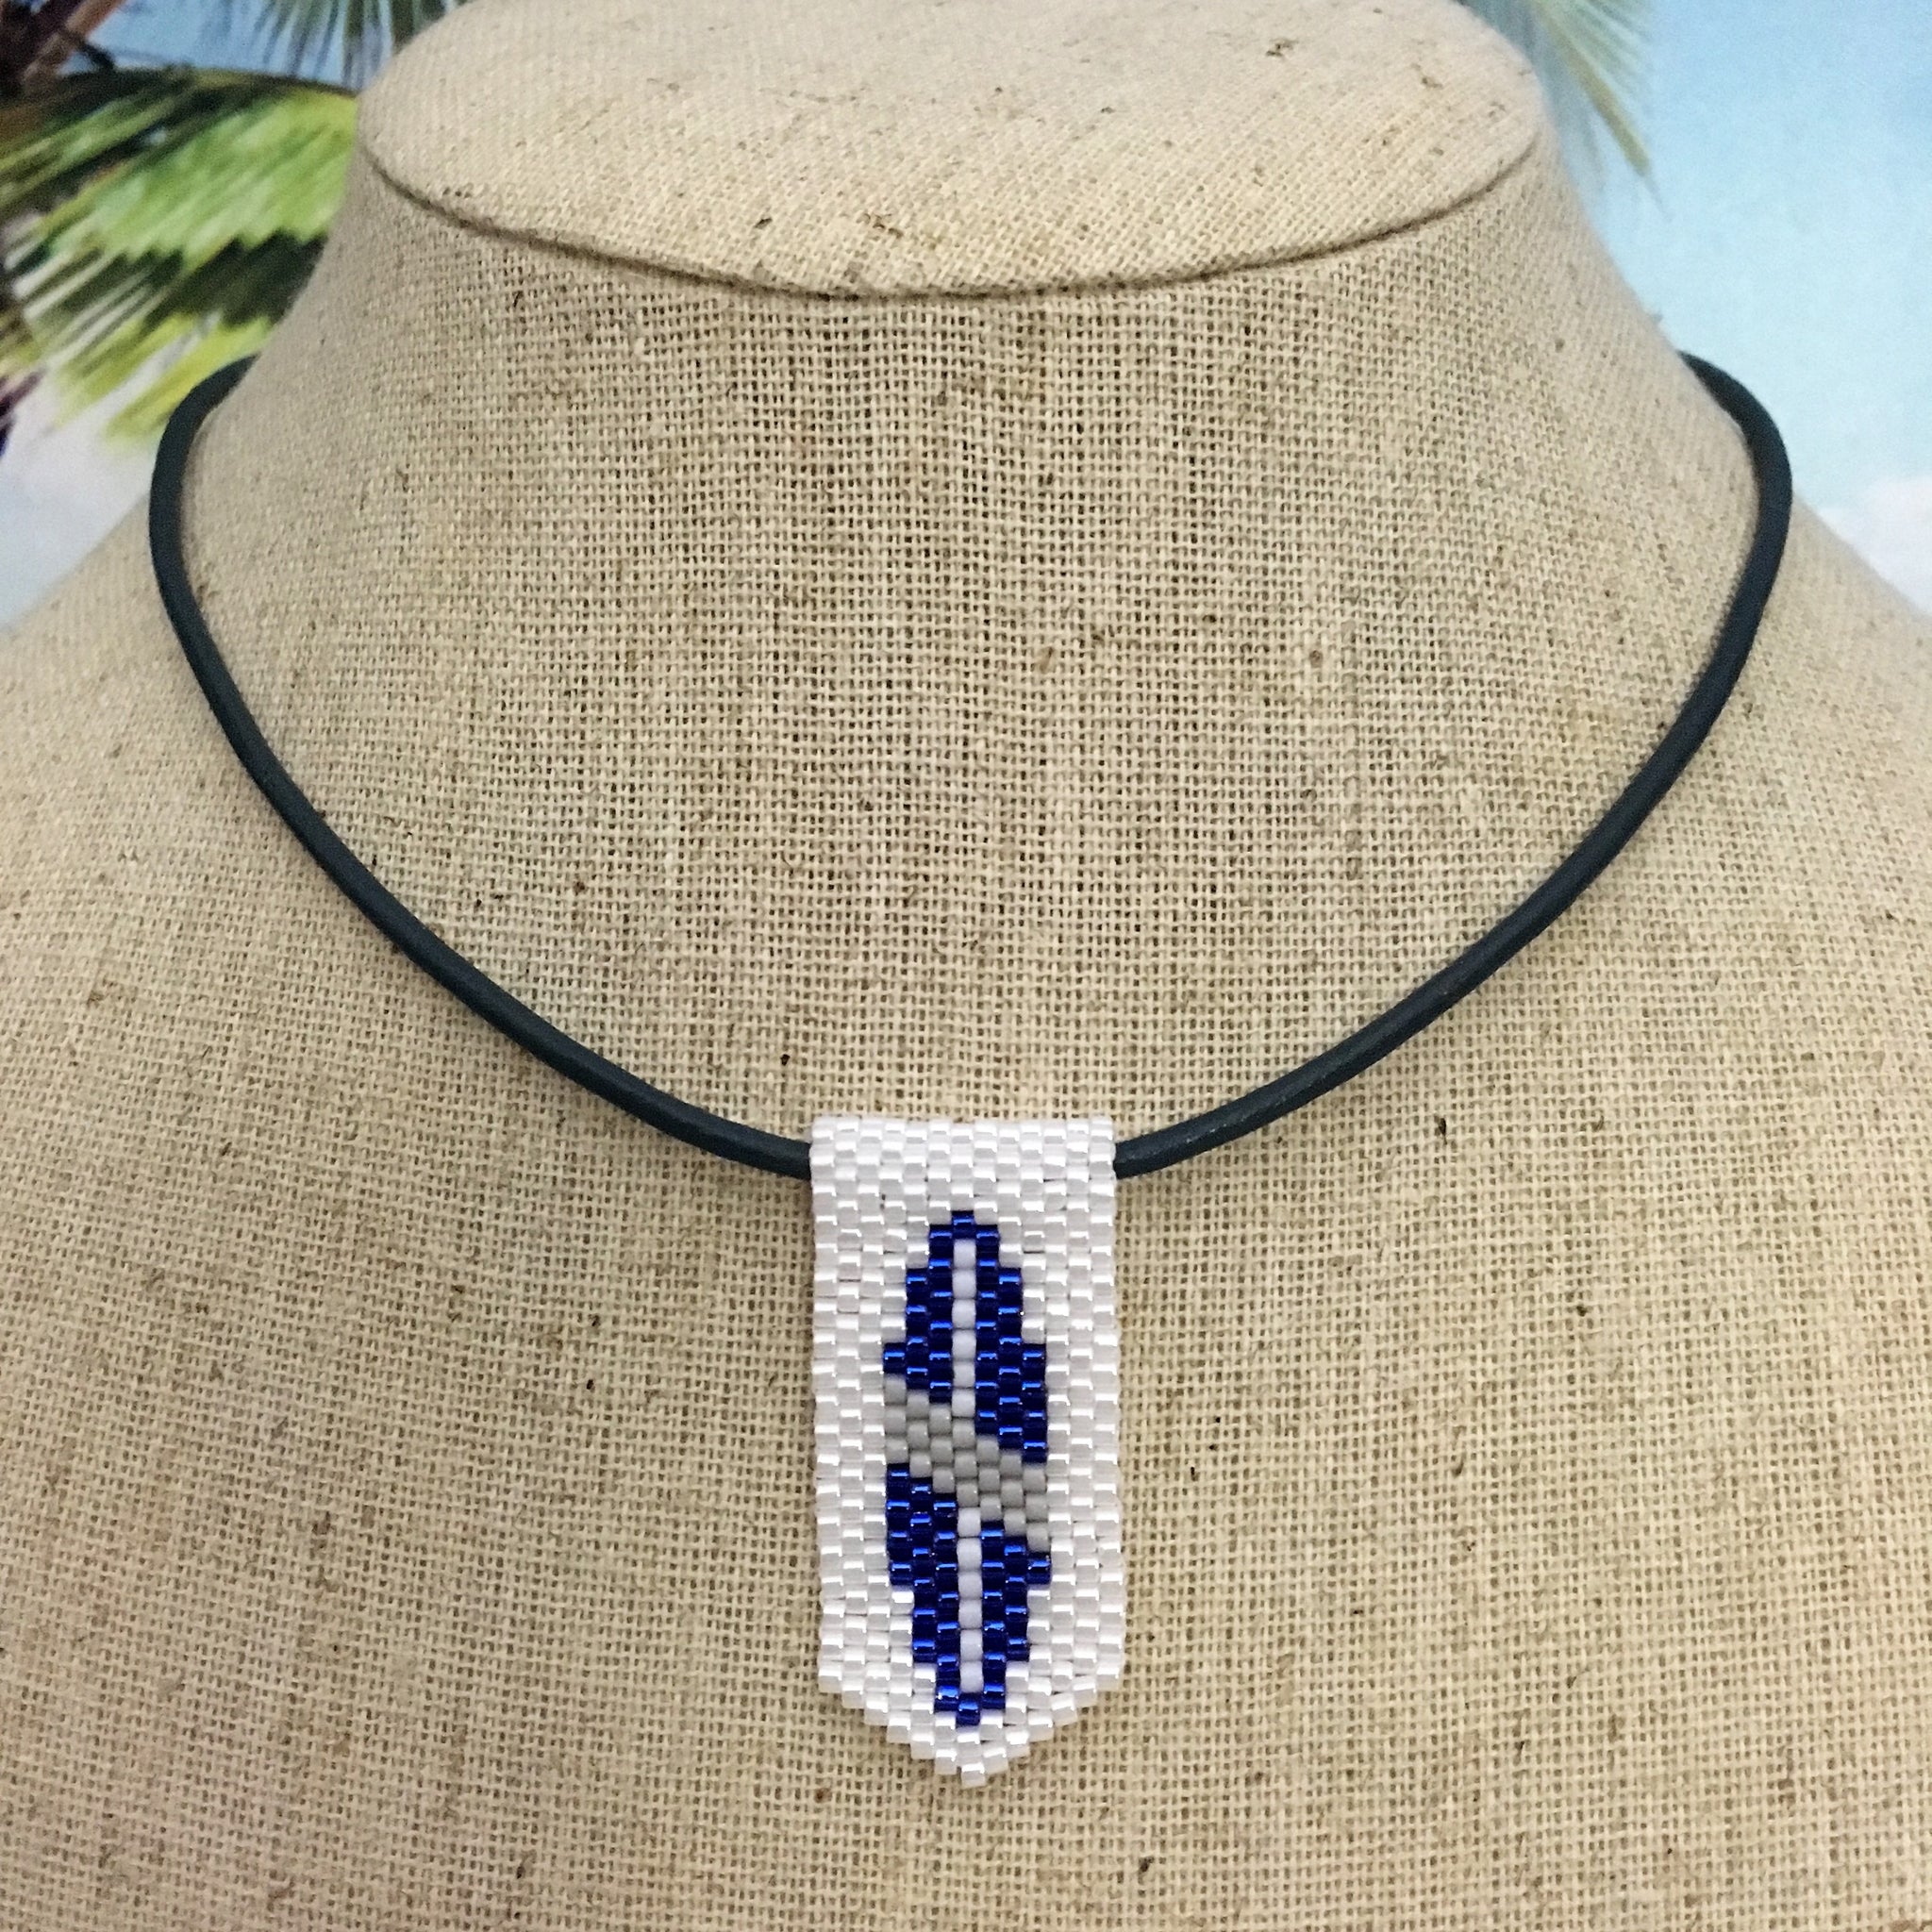 Handmade beaded mini pendant surfboard blue gray white leather cord